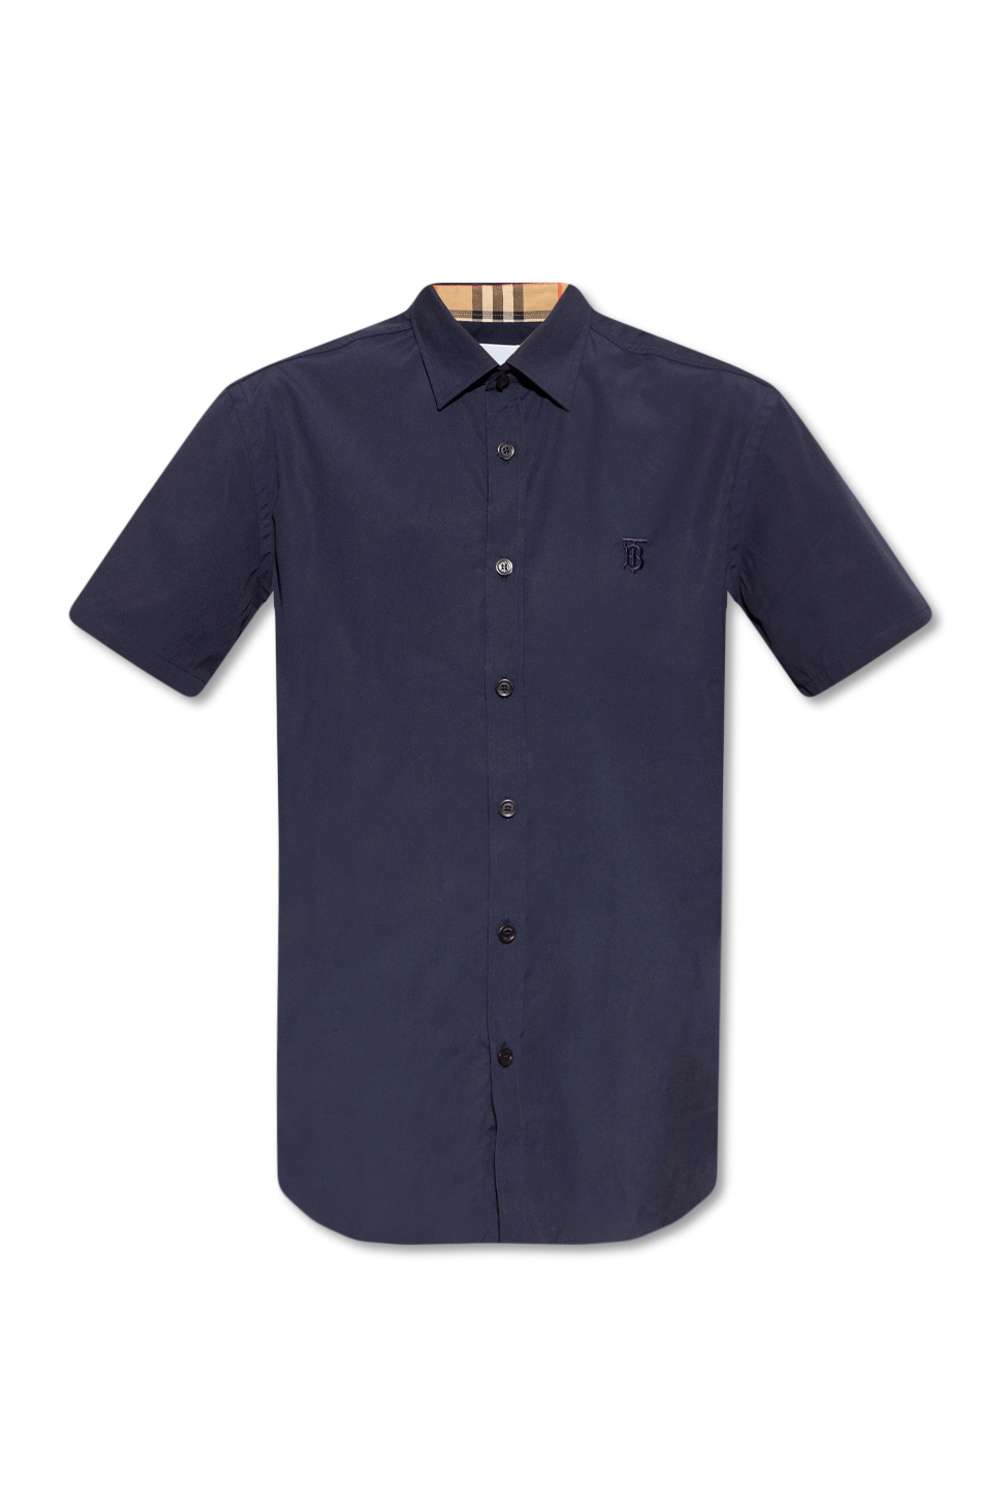 burberry Shorts ‘Sherwood’ short-sleeved shirt